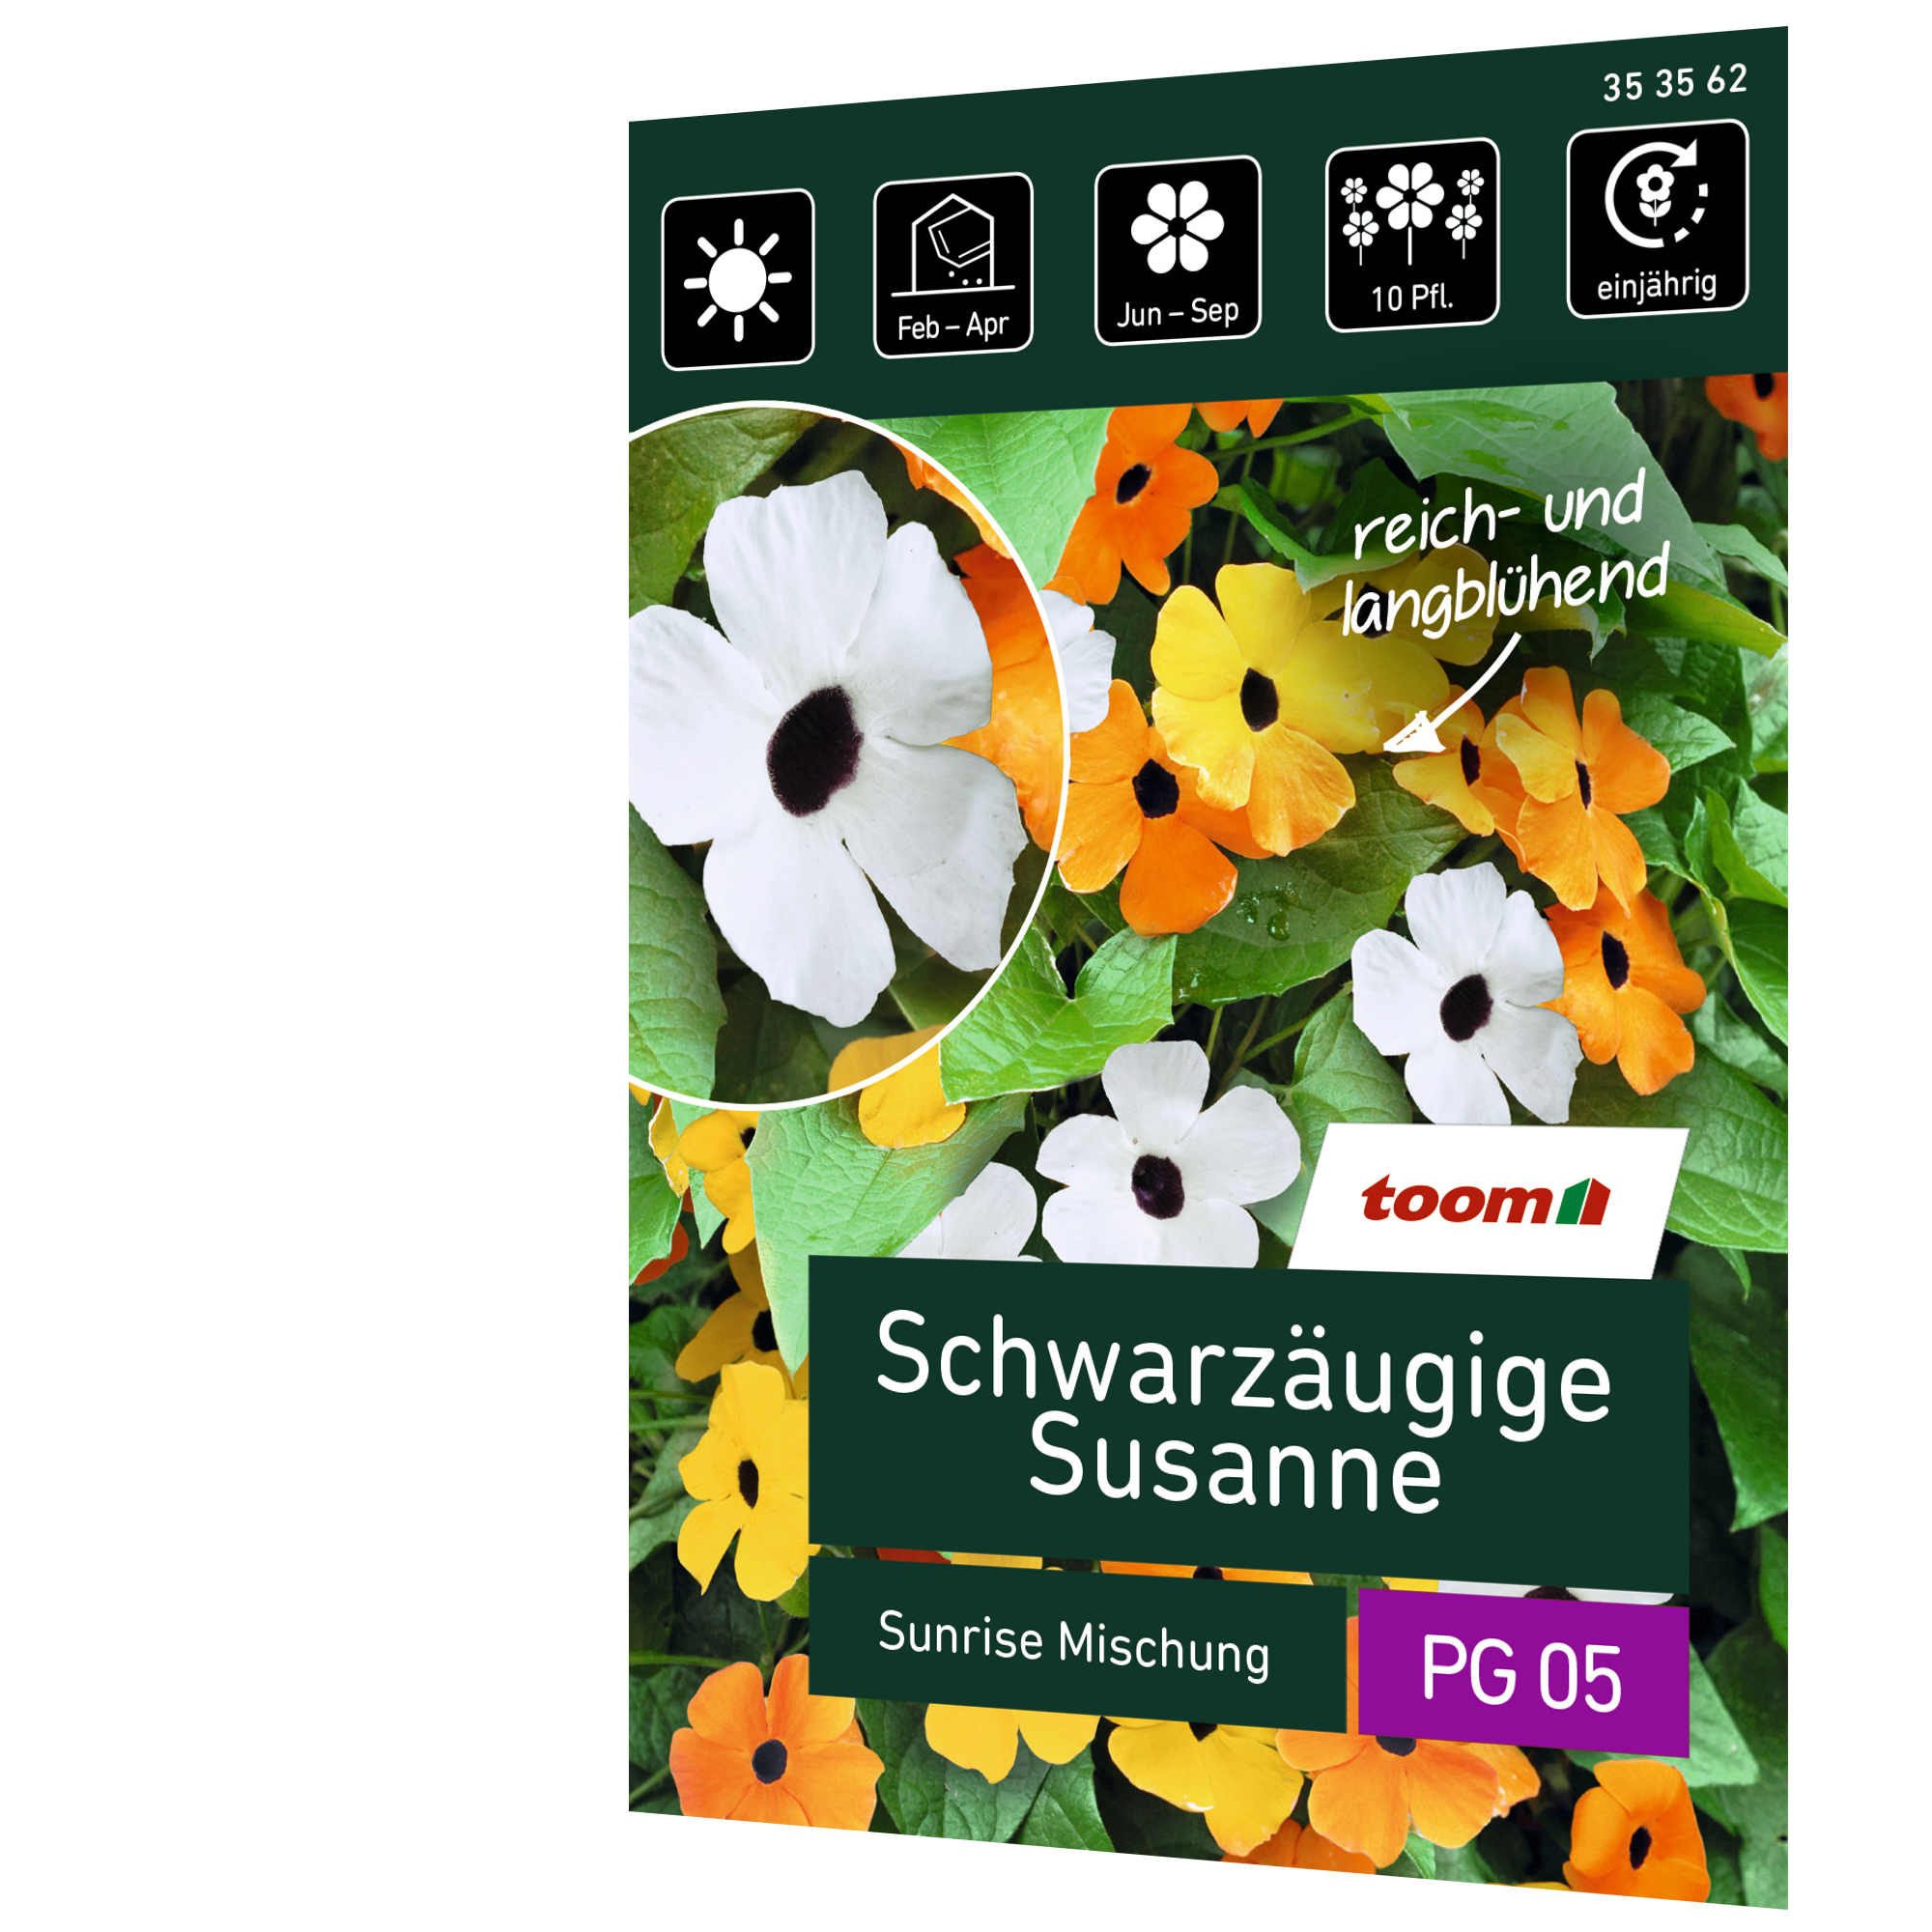 Schwarzäugige Susanne 'Sunrise Mischung' + product picture